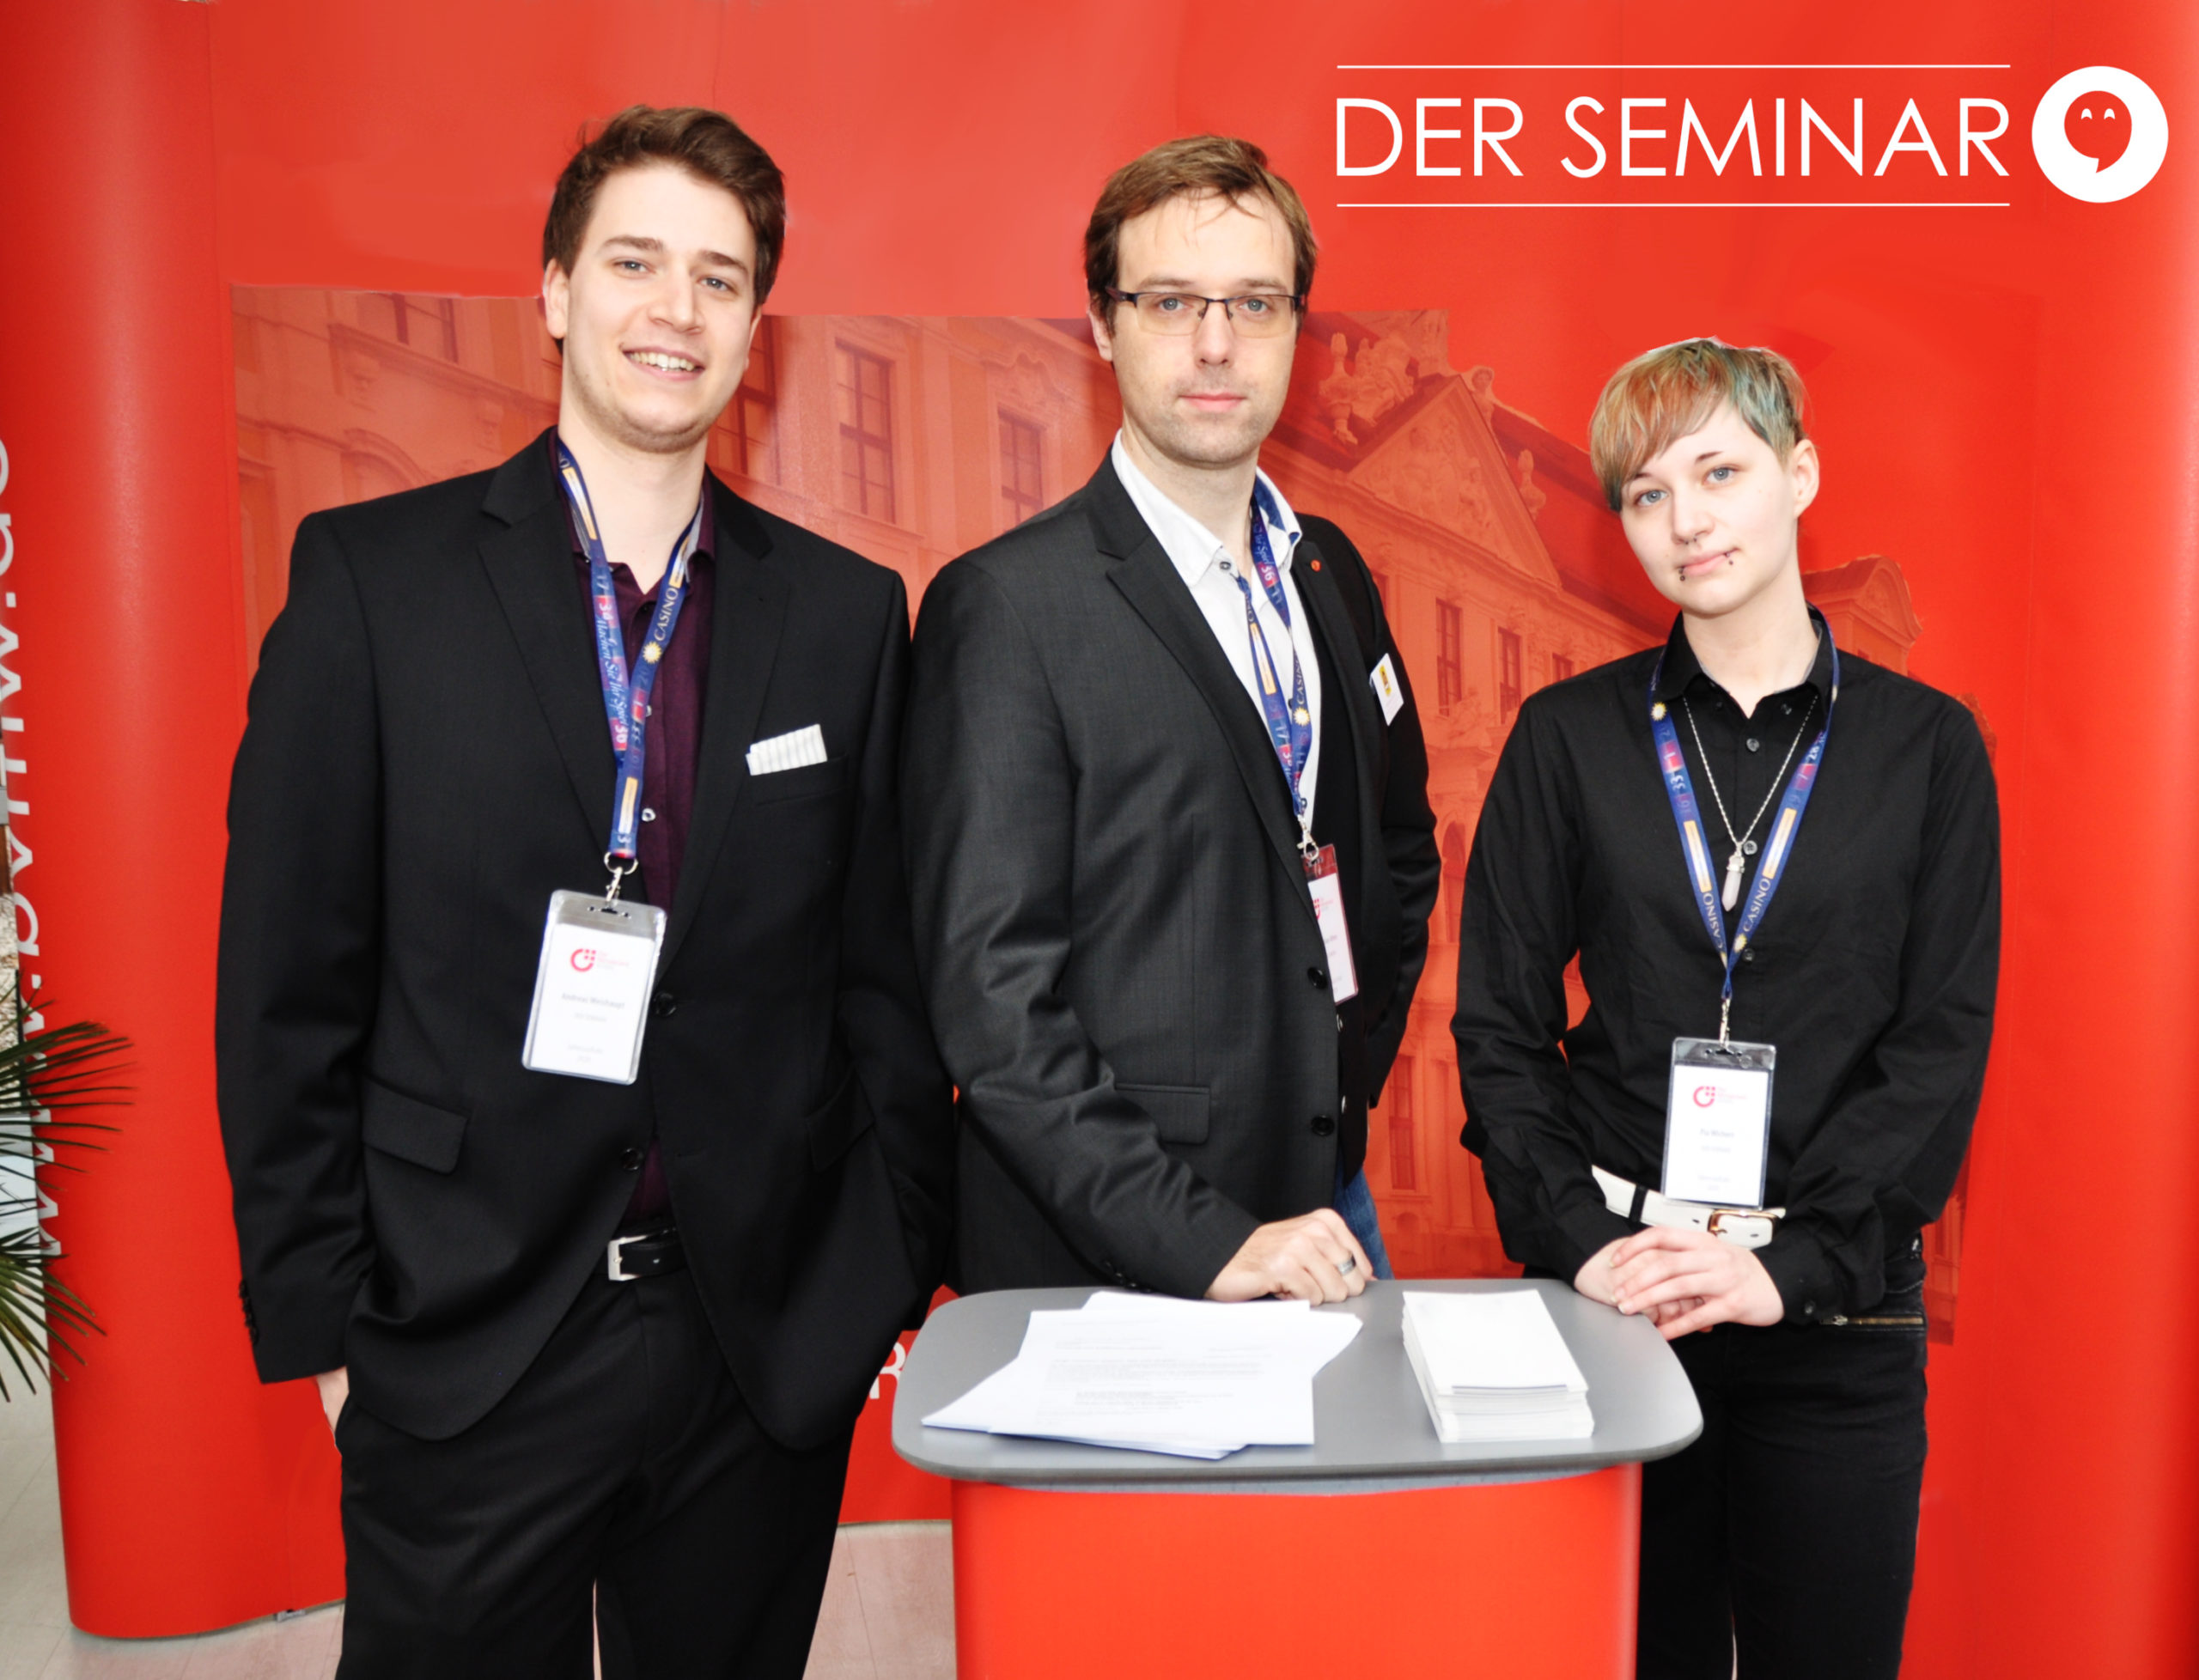 Das Gründerteam von DER SEMINAR (v.l.): Christian Allner, Andreas Weishaupt, Pia-Pascal Wichert (Foto: Peter Martini, druckfertig 300 dpi).